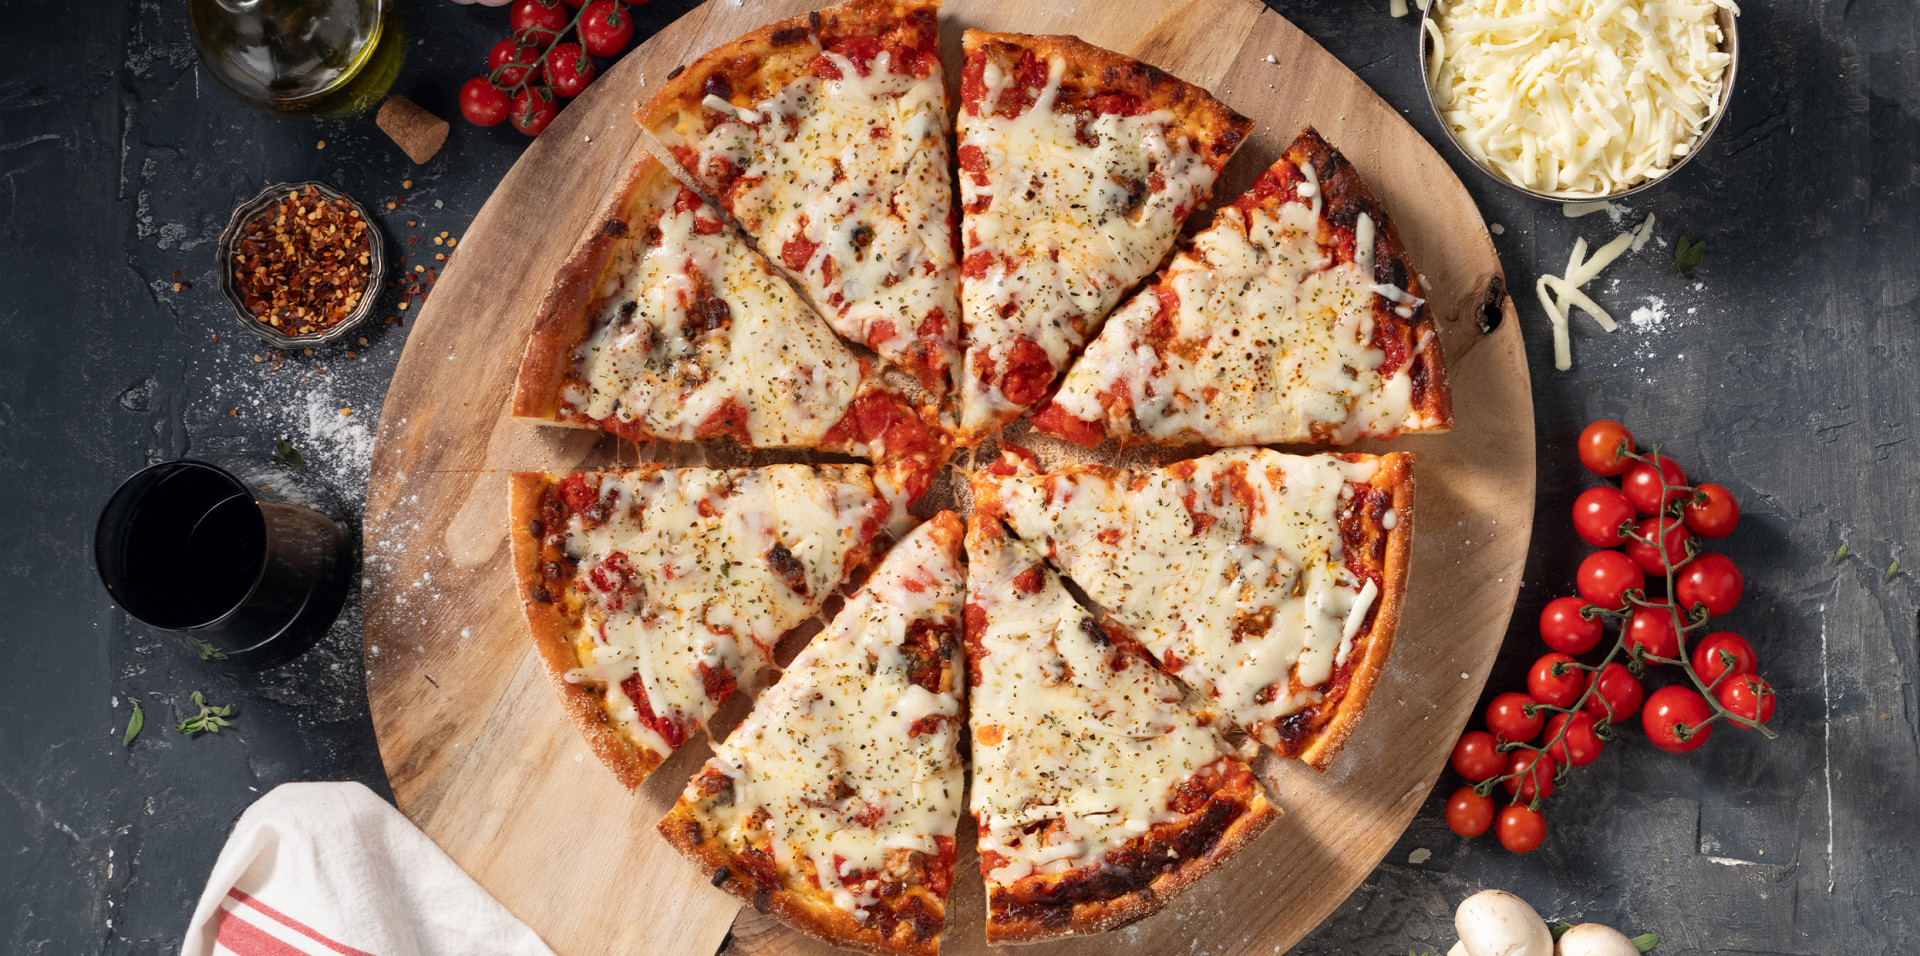 https://www.sargento.com/assets/Uploads/Recipe/Image/Easy-Deep-Dish-Pizza.jpg